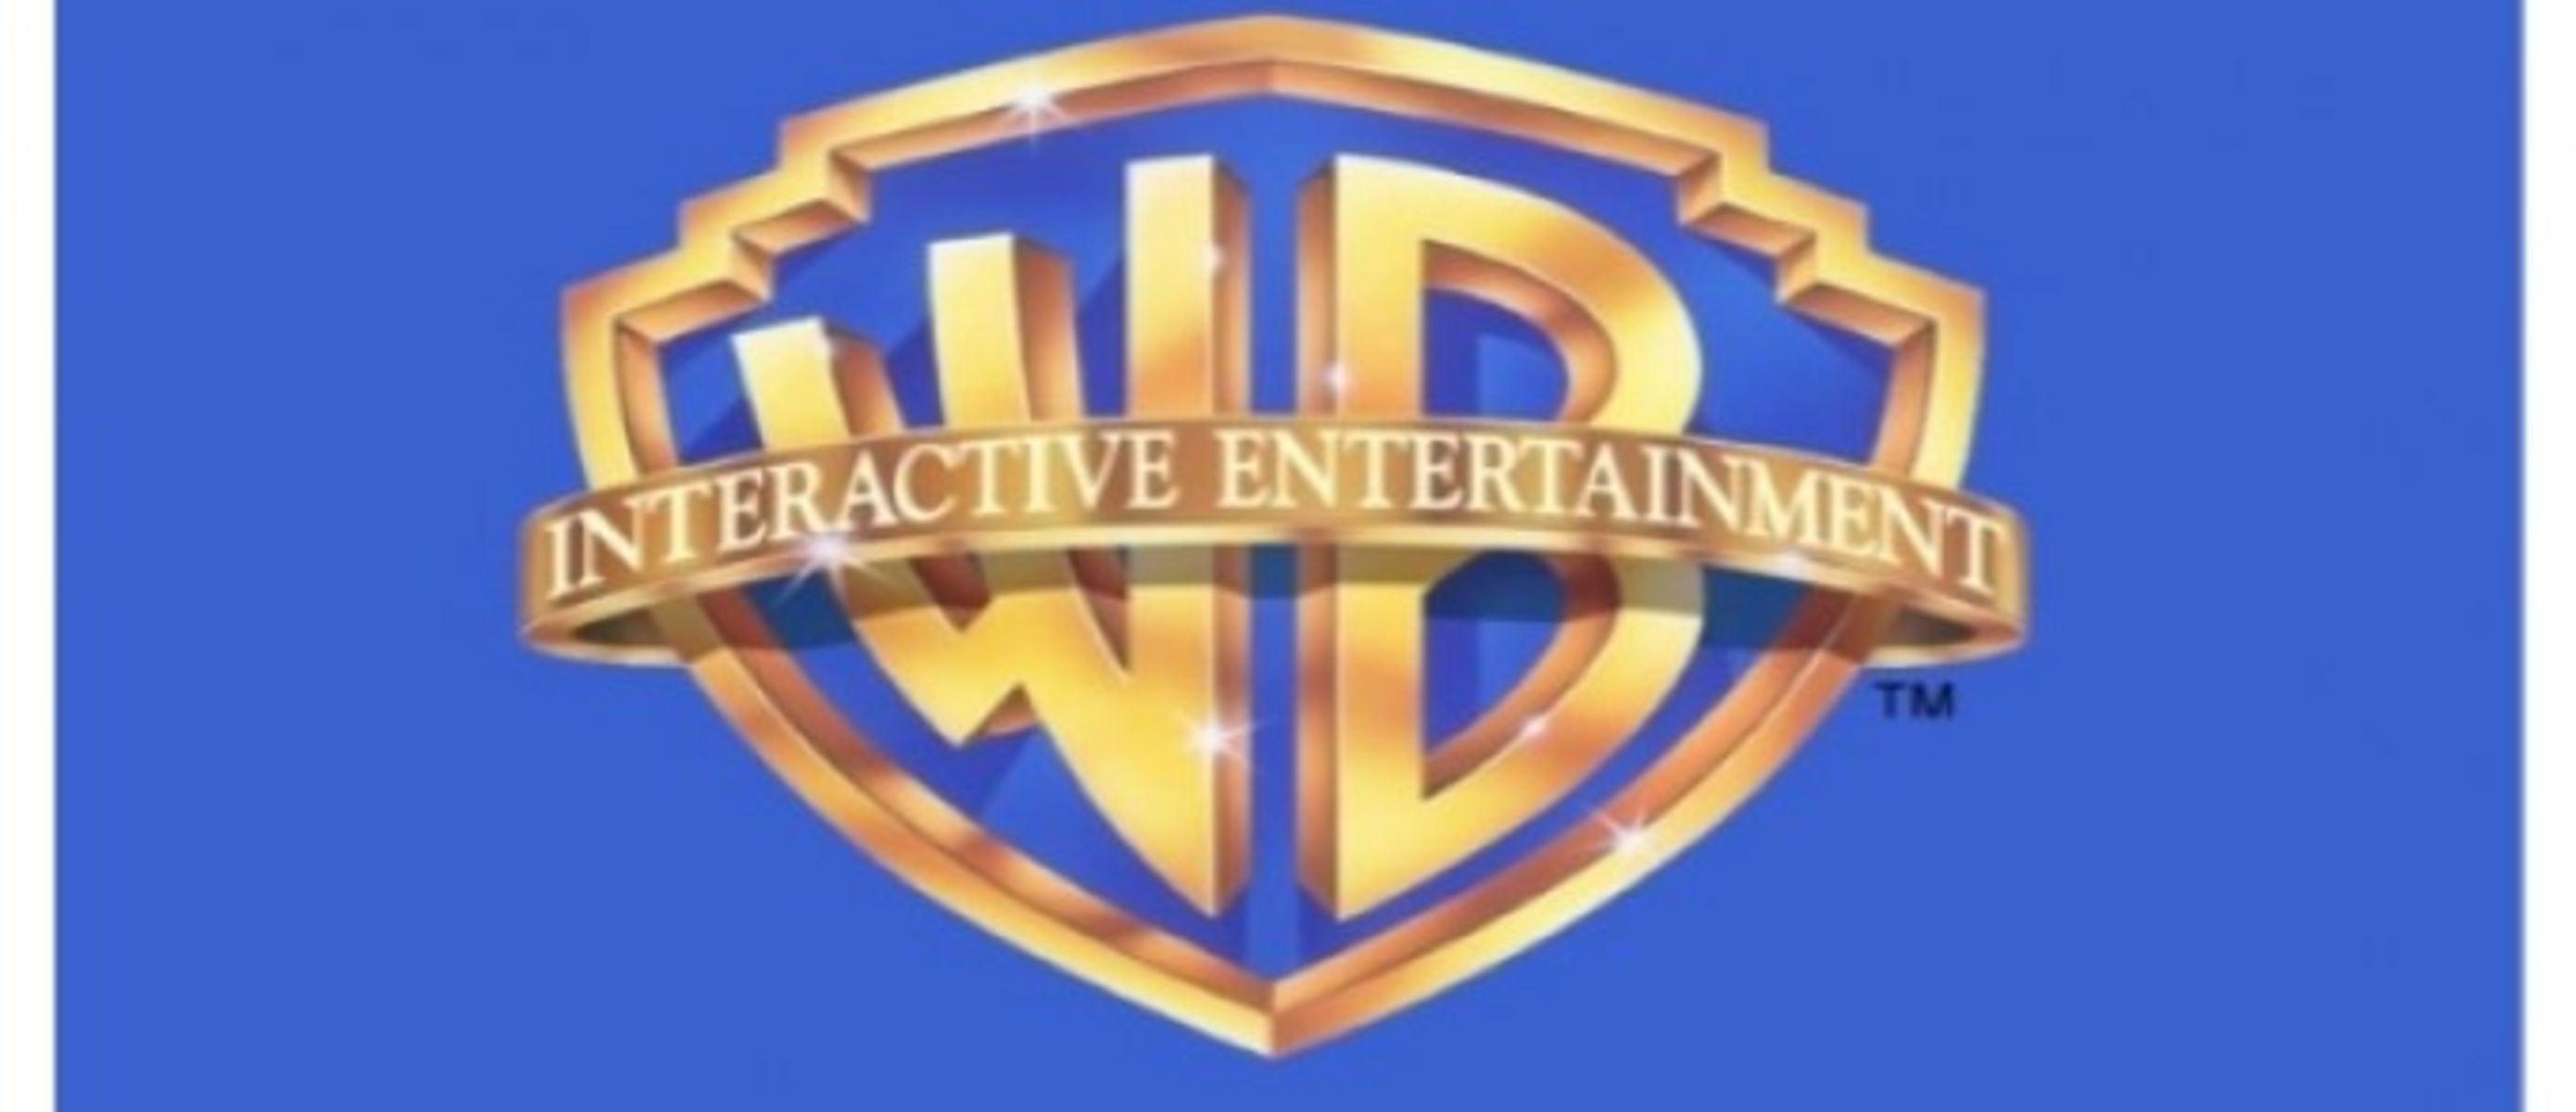 Wb games игры. Warner Bros. Interactive Entertainment. Warner Bros interactive Entertainment logo. Warner Bros. Пожар. WB games Monolith logo.